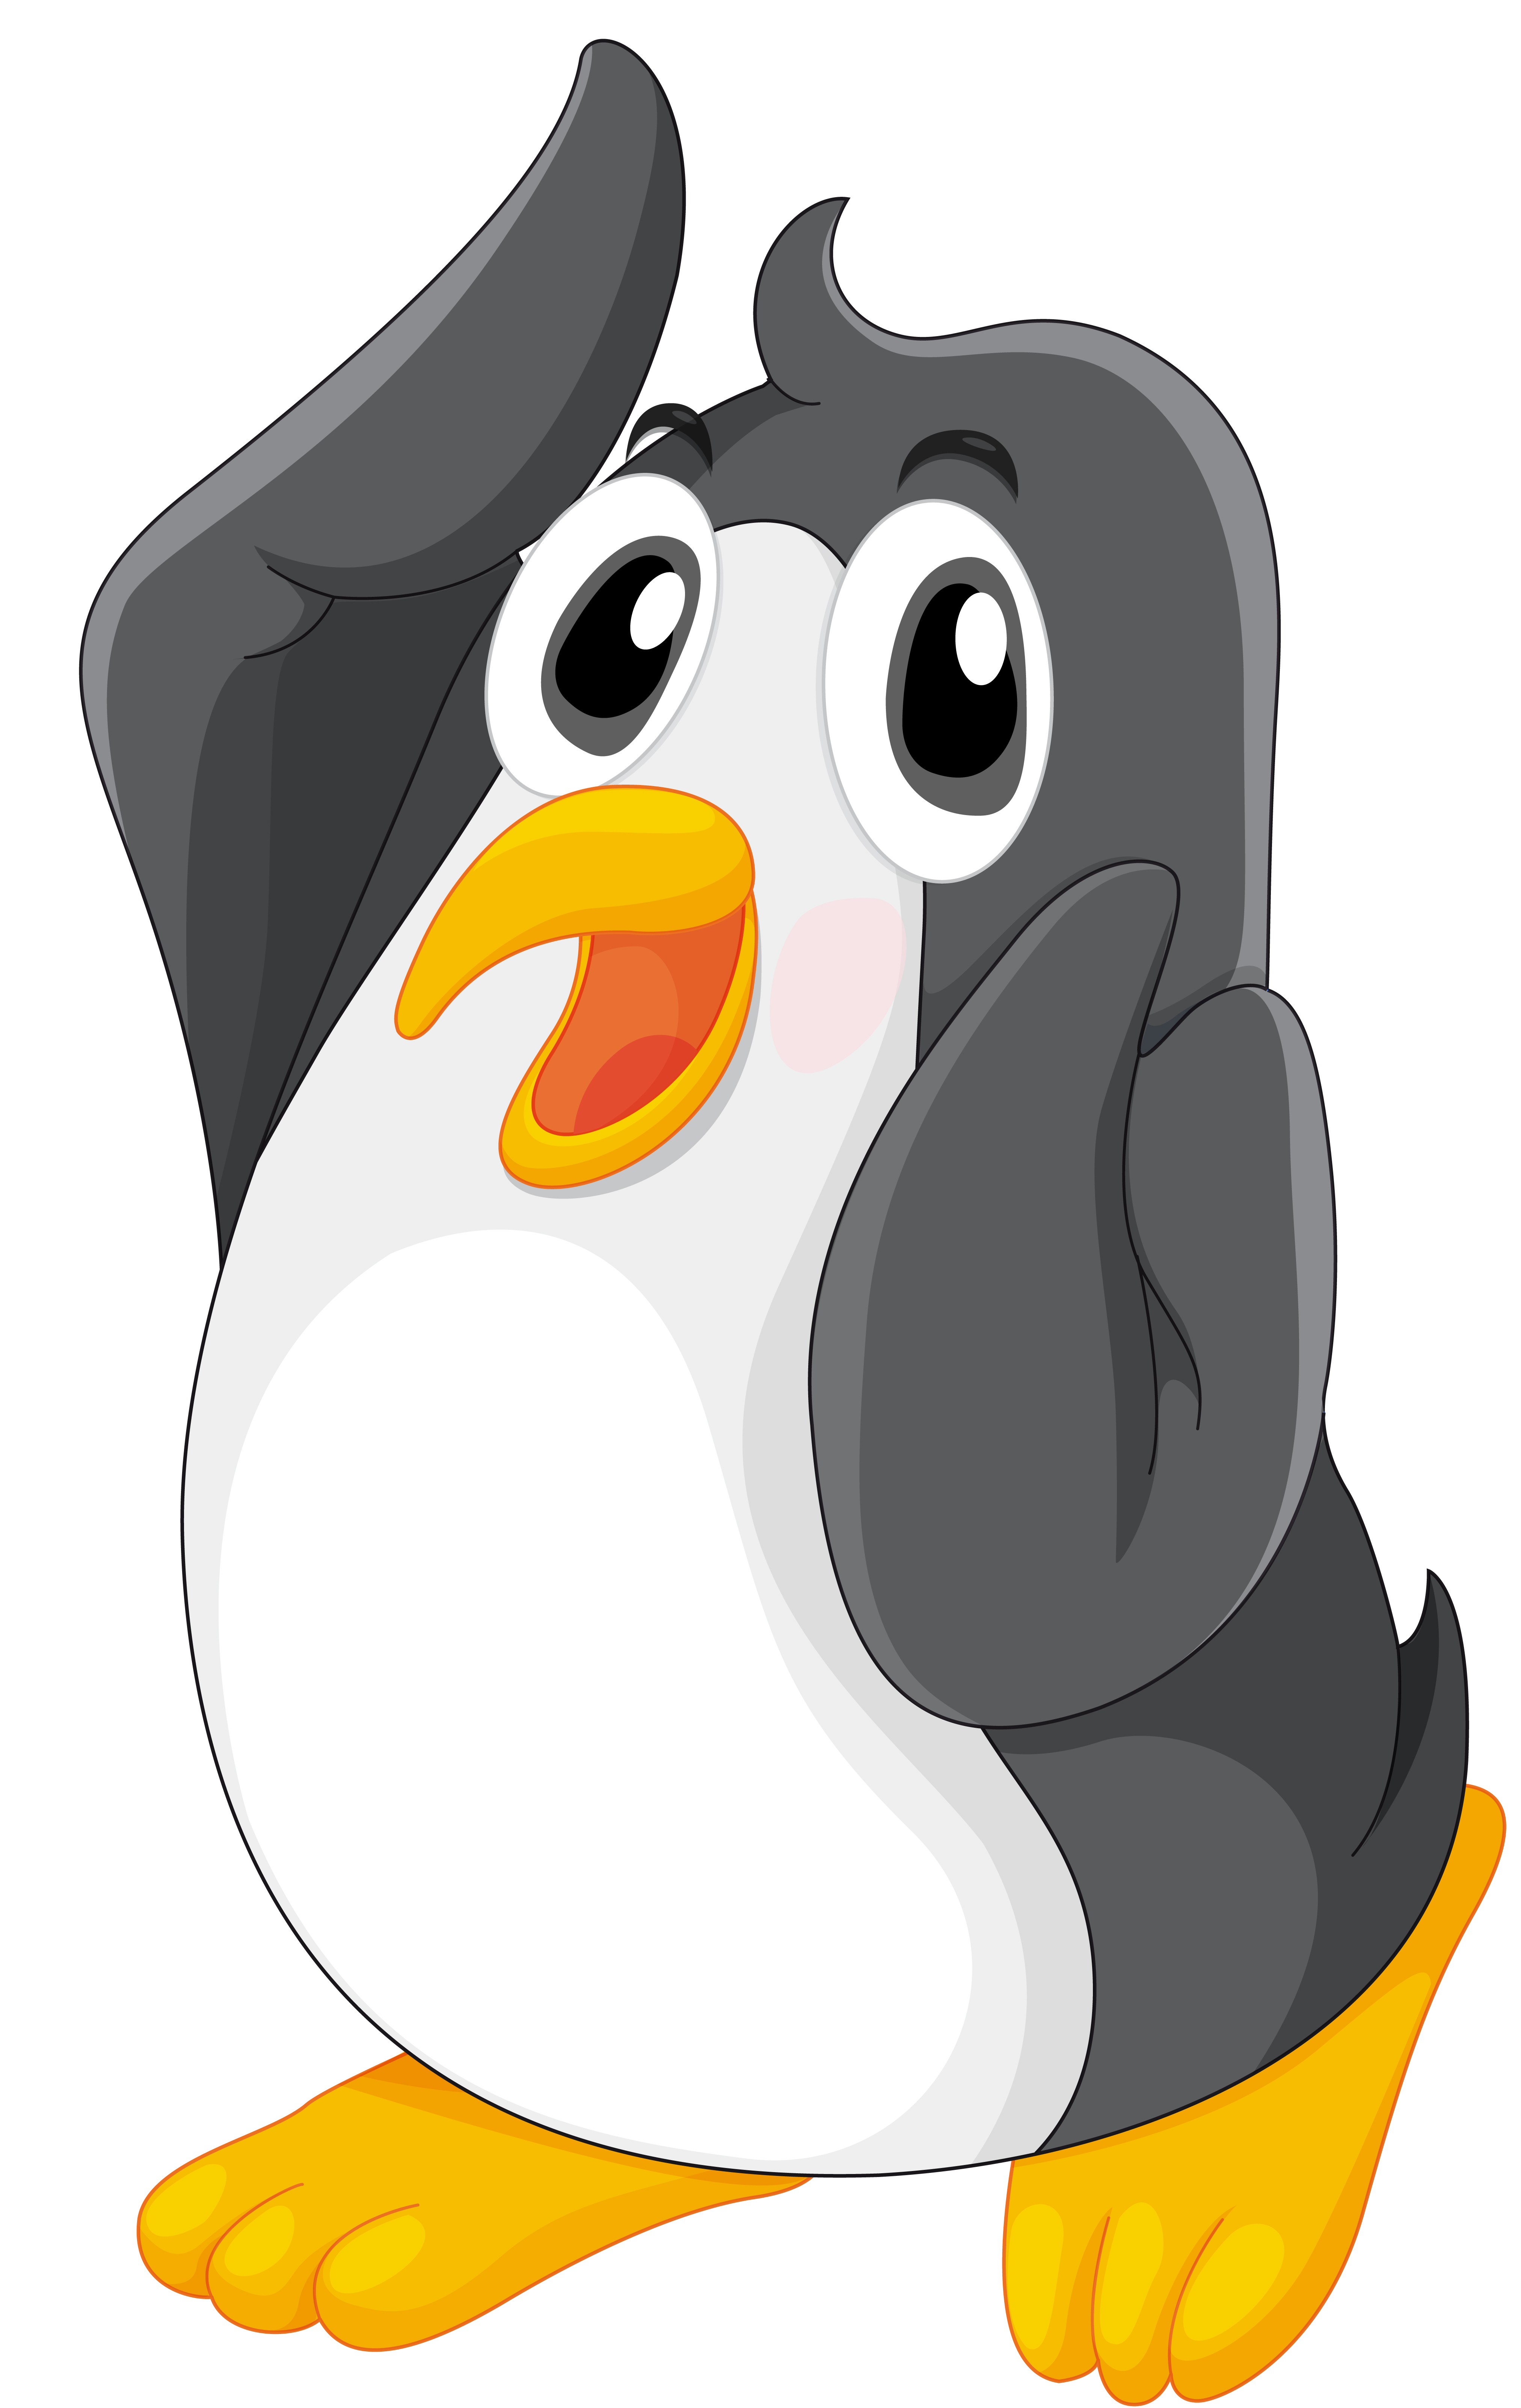 Penguin 454966 Download Free Vectors, Clipart Graphics